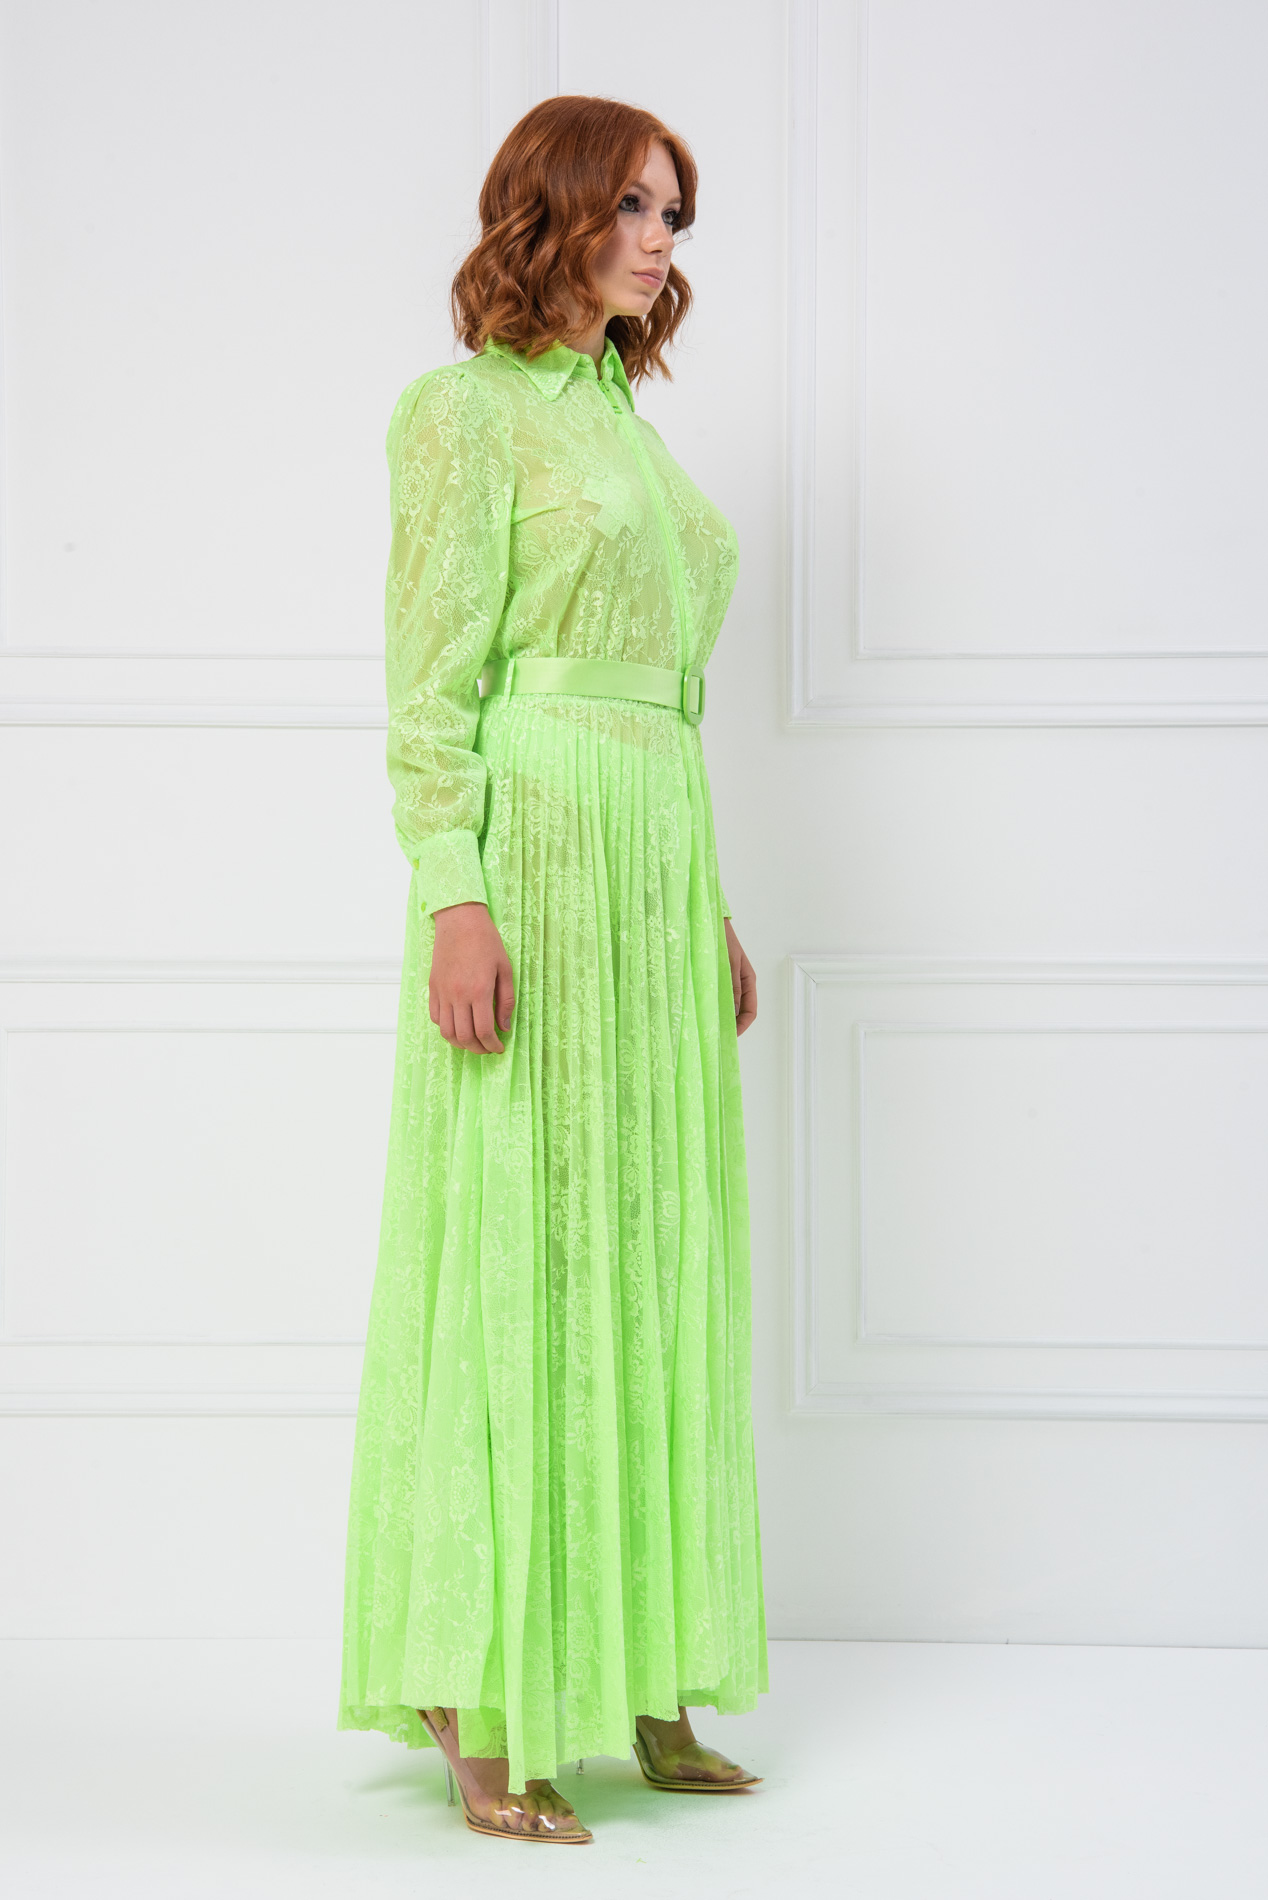 neon green lace dress